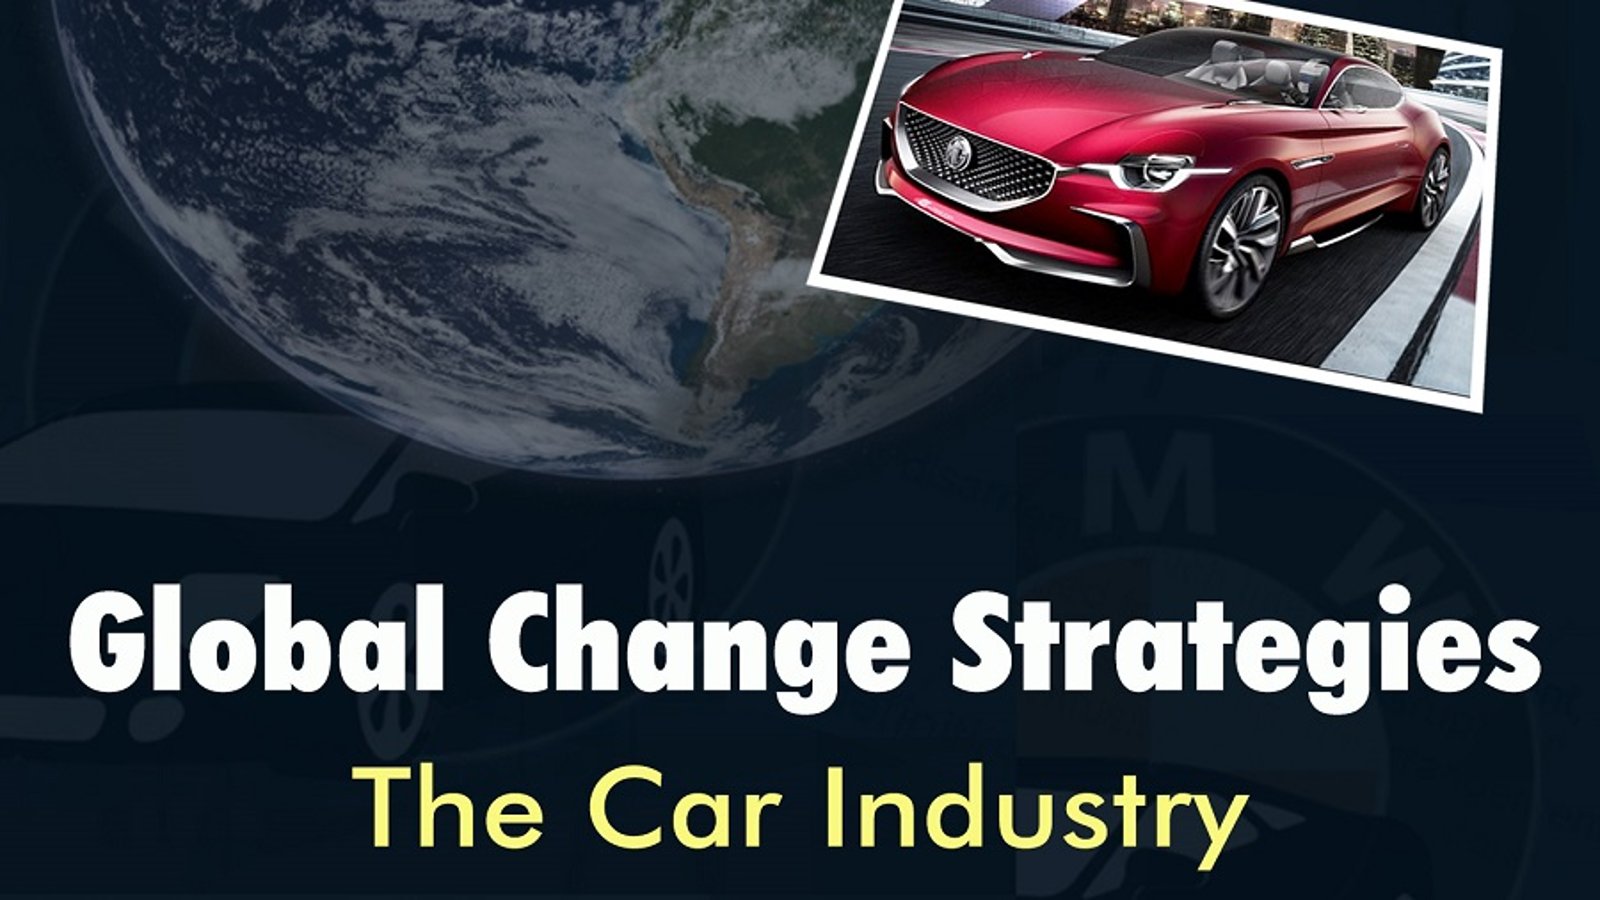 Global Change Strategies: The Car Industry